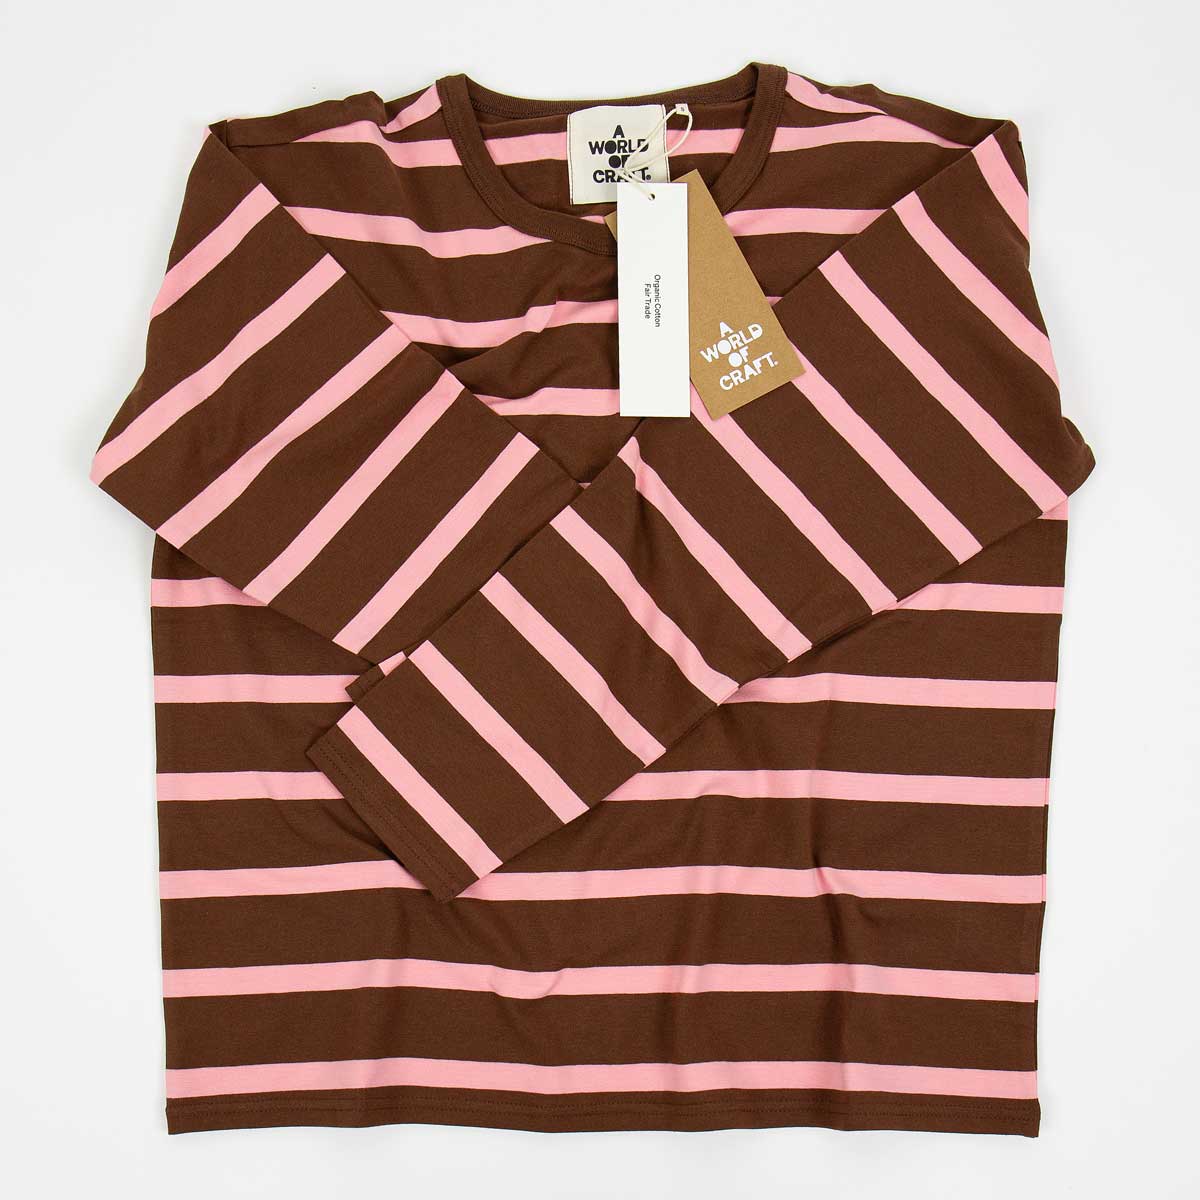 AWOC Woman T-shirt, long sleeve, brown/pink